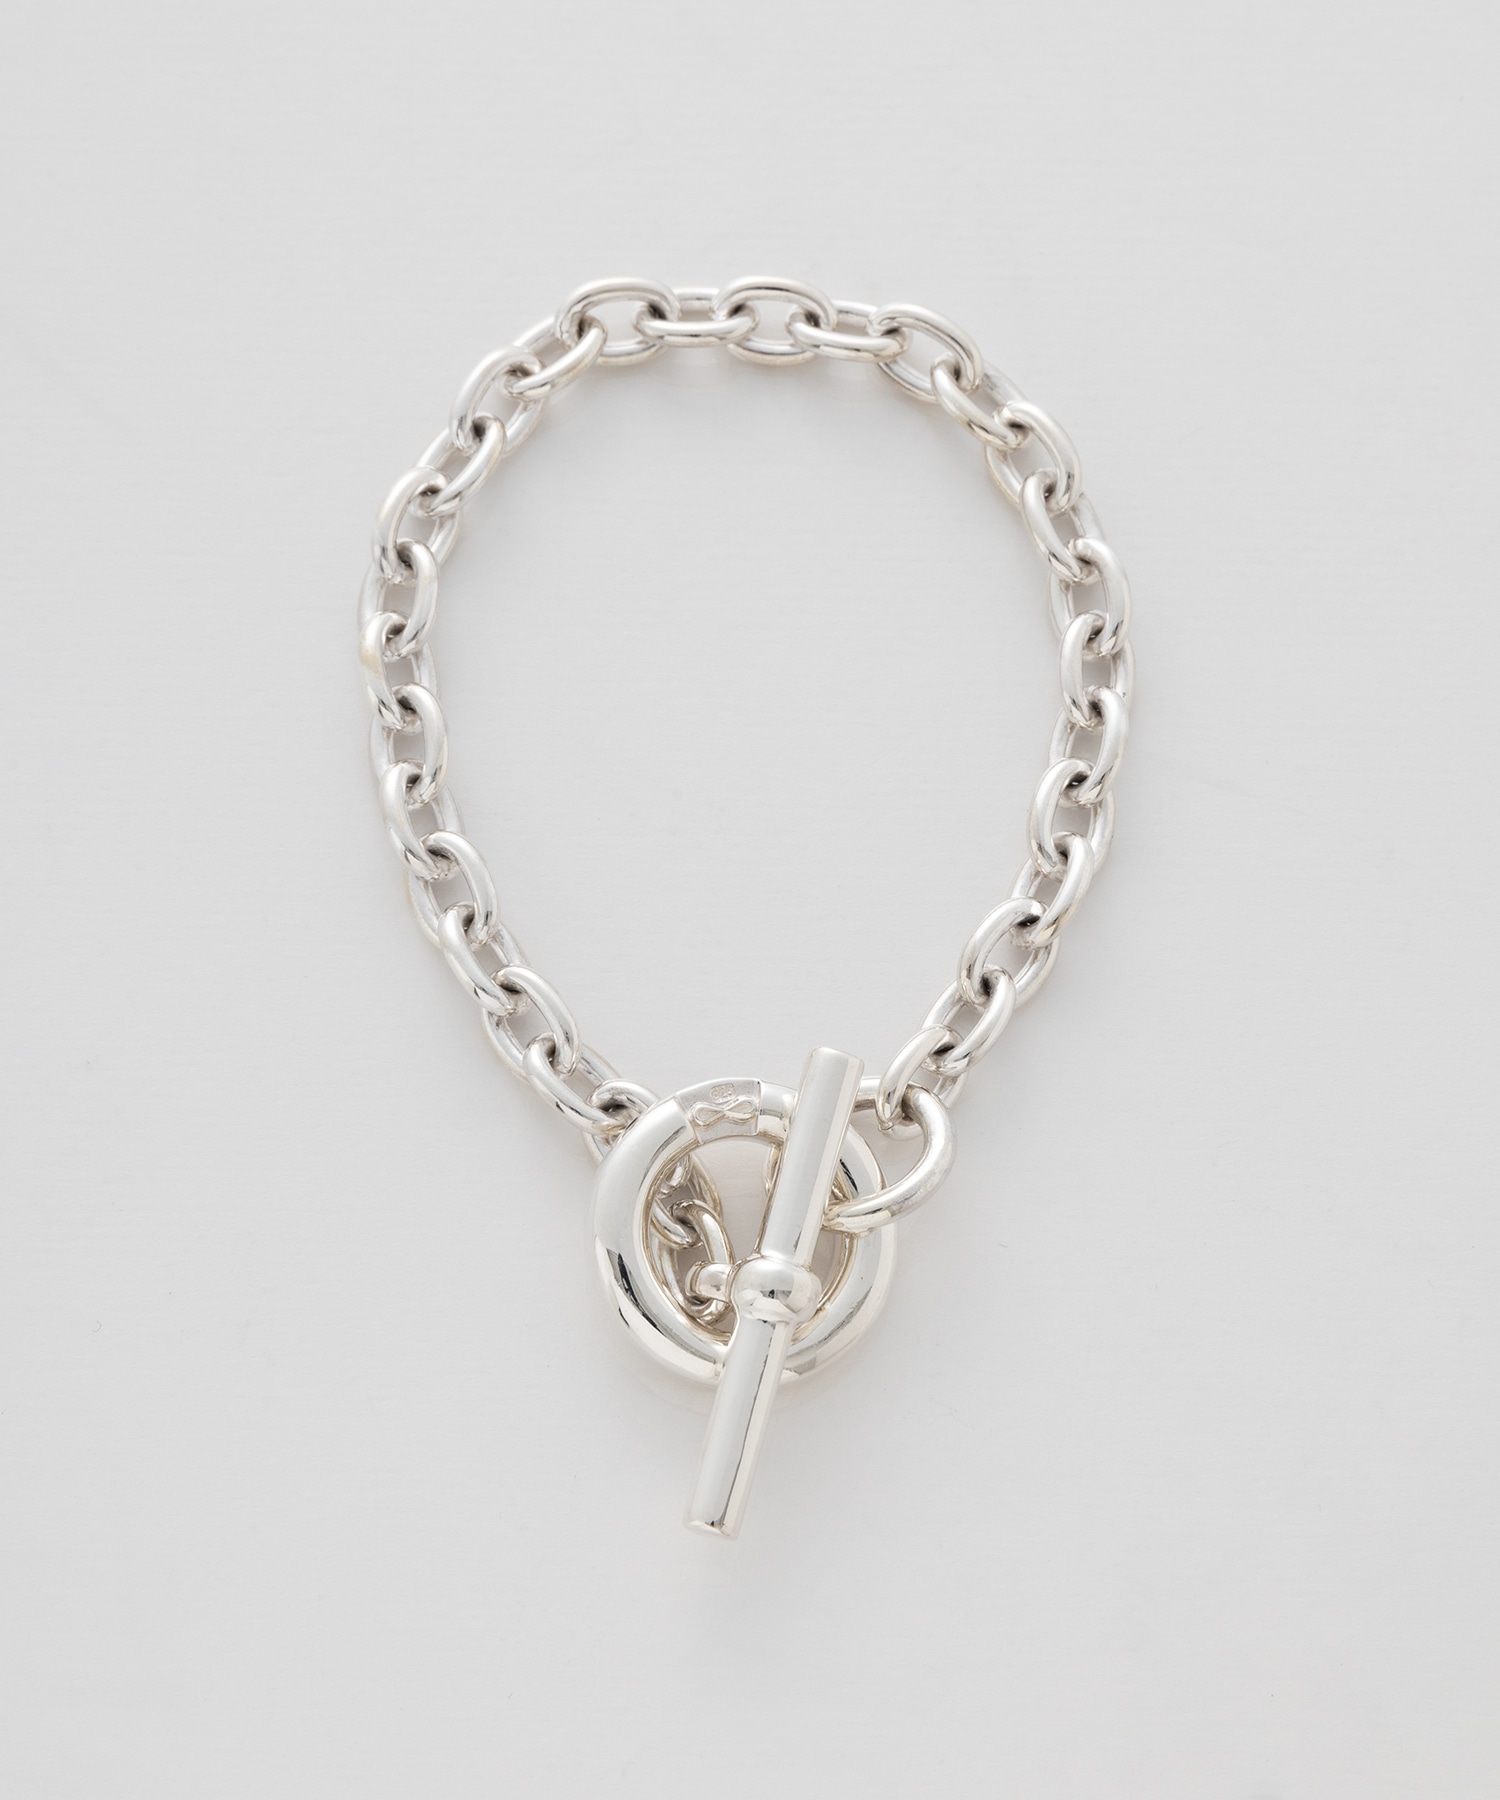 Hook connect bracelet S